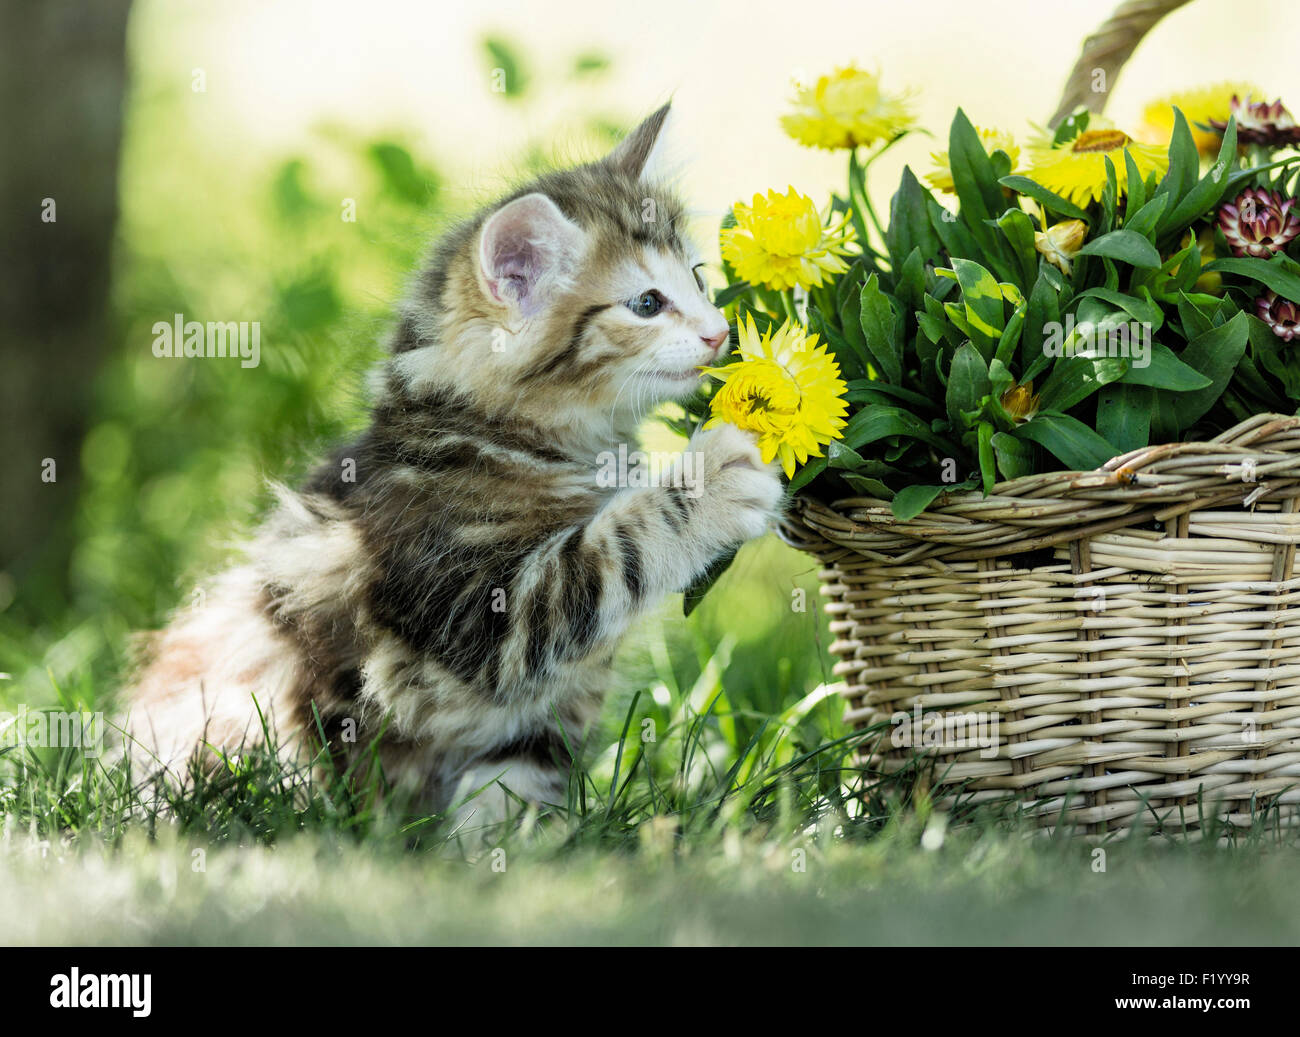 Norwegian Forest Cat Tabby kitten touching gently Straw Daisy basket Germany Stock Photo